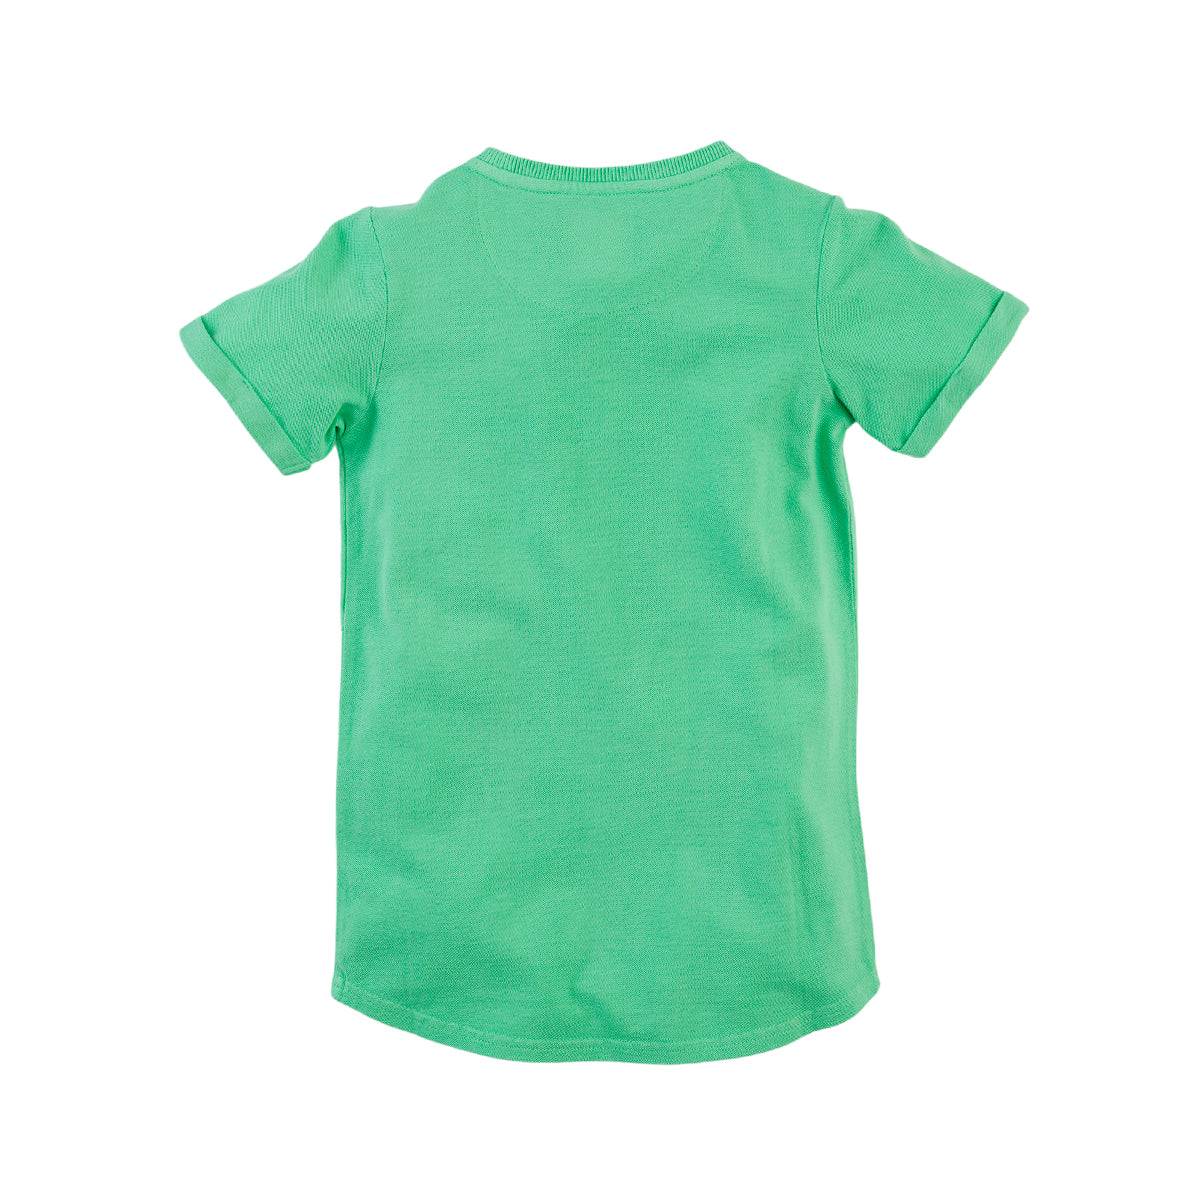 Z8 Shirt short sleeve Jidde Paradise green